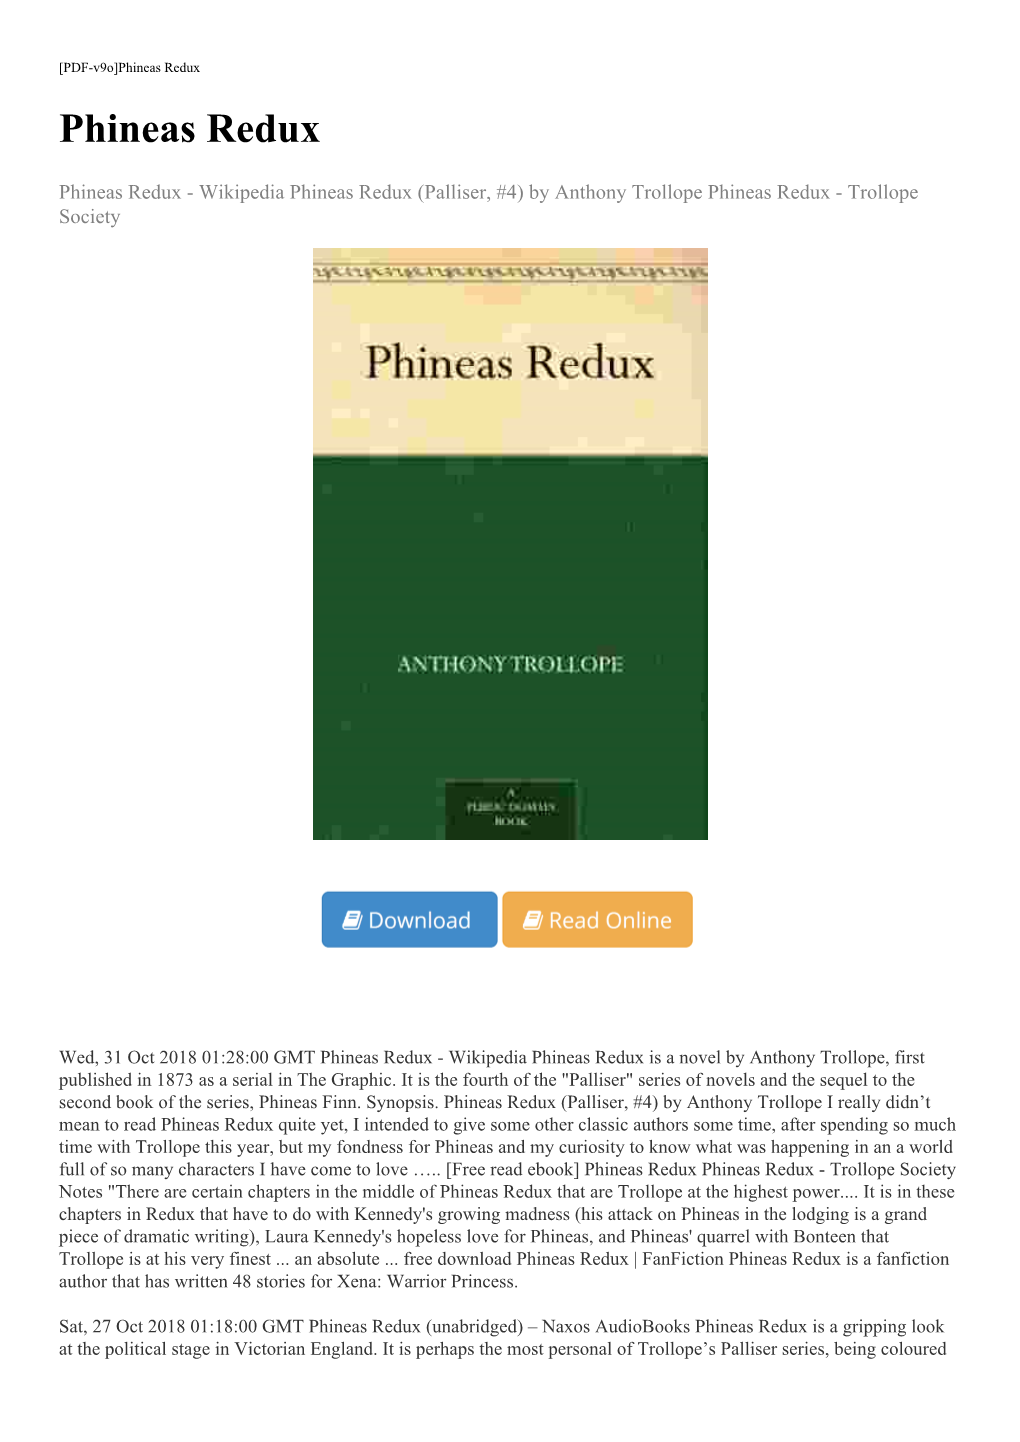 [Free Read Ebook] Phineas Redux